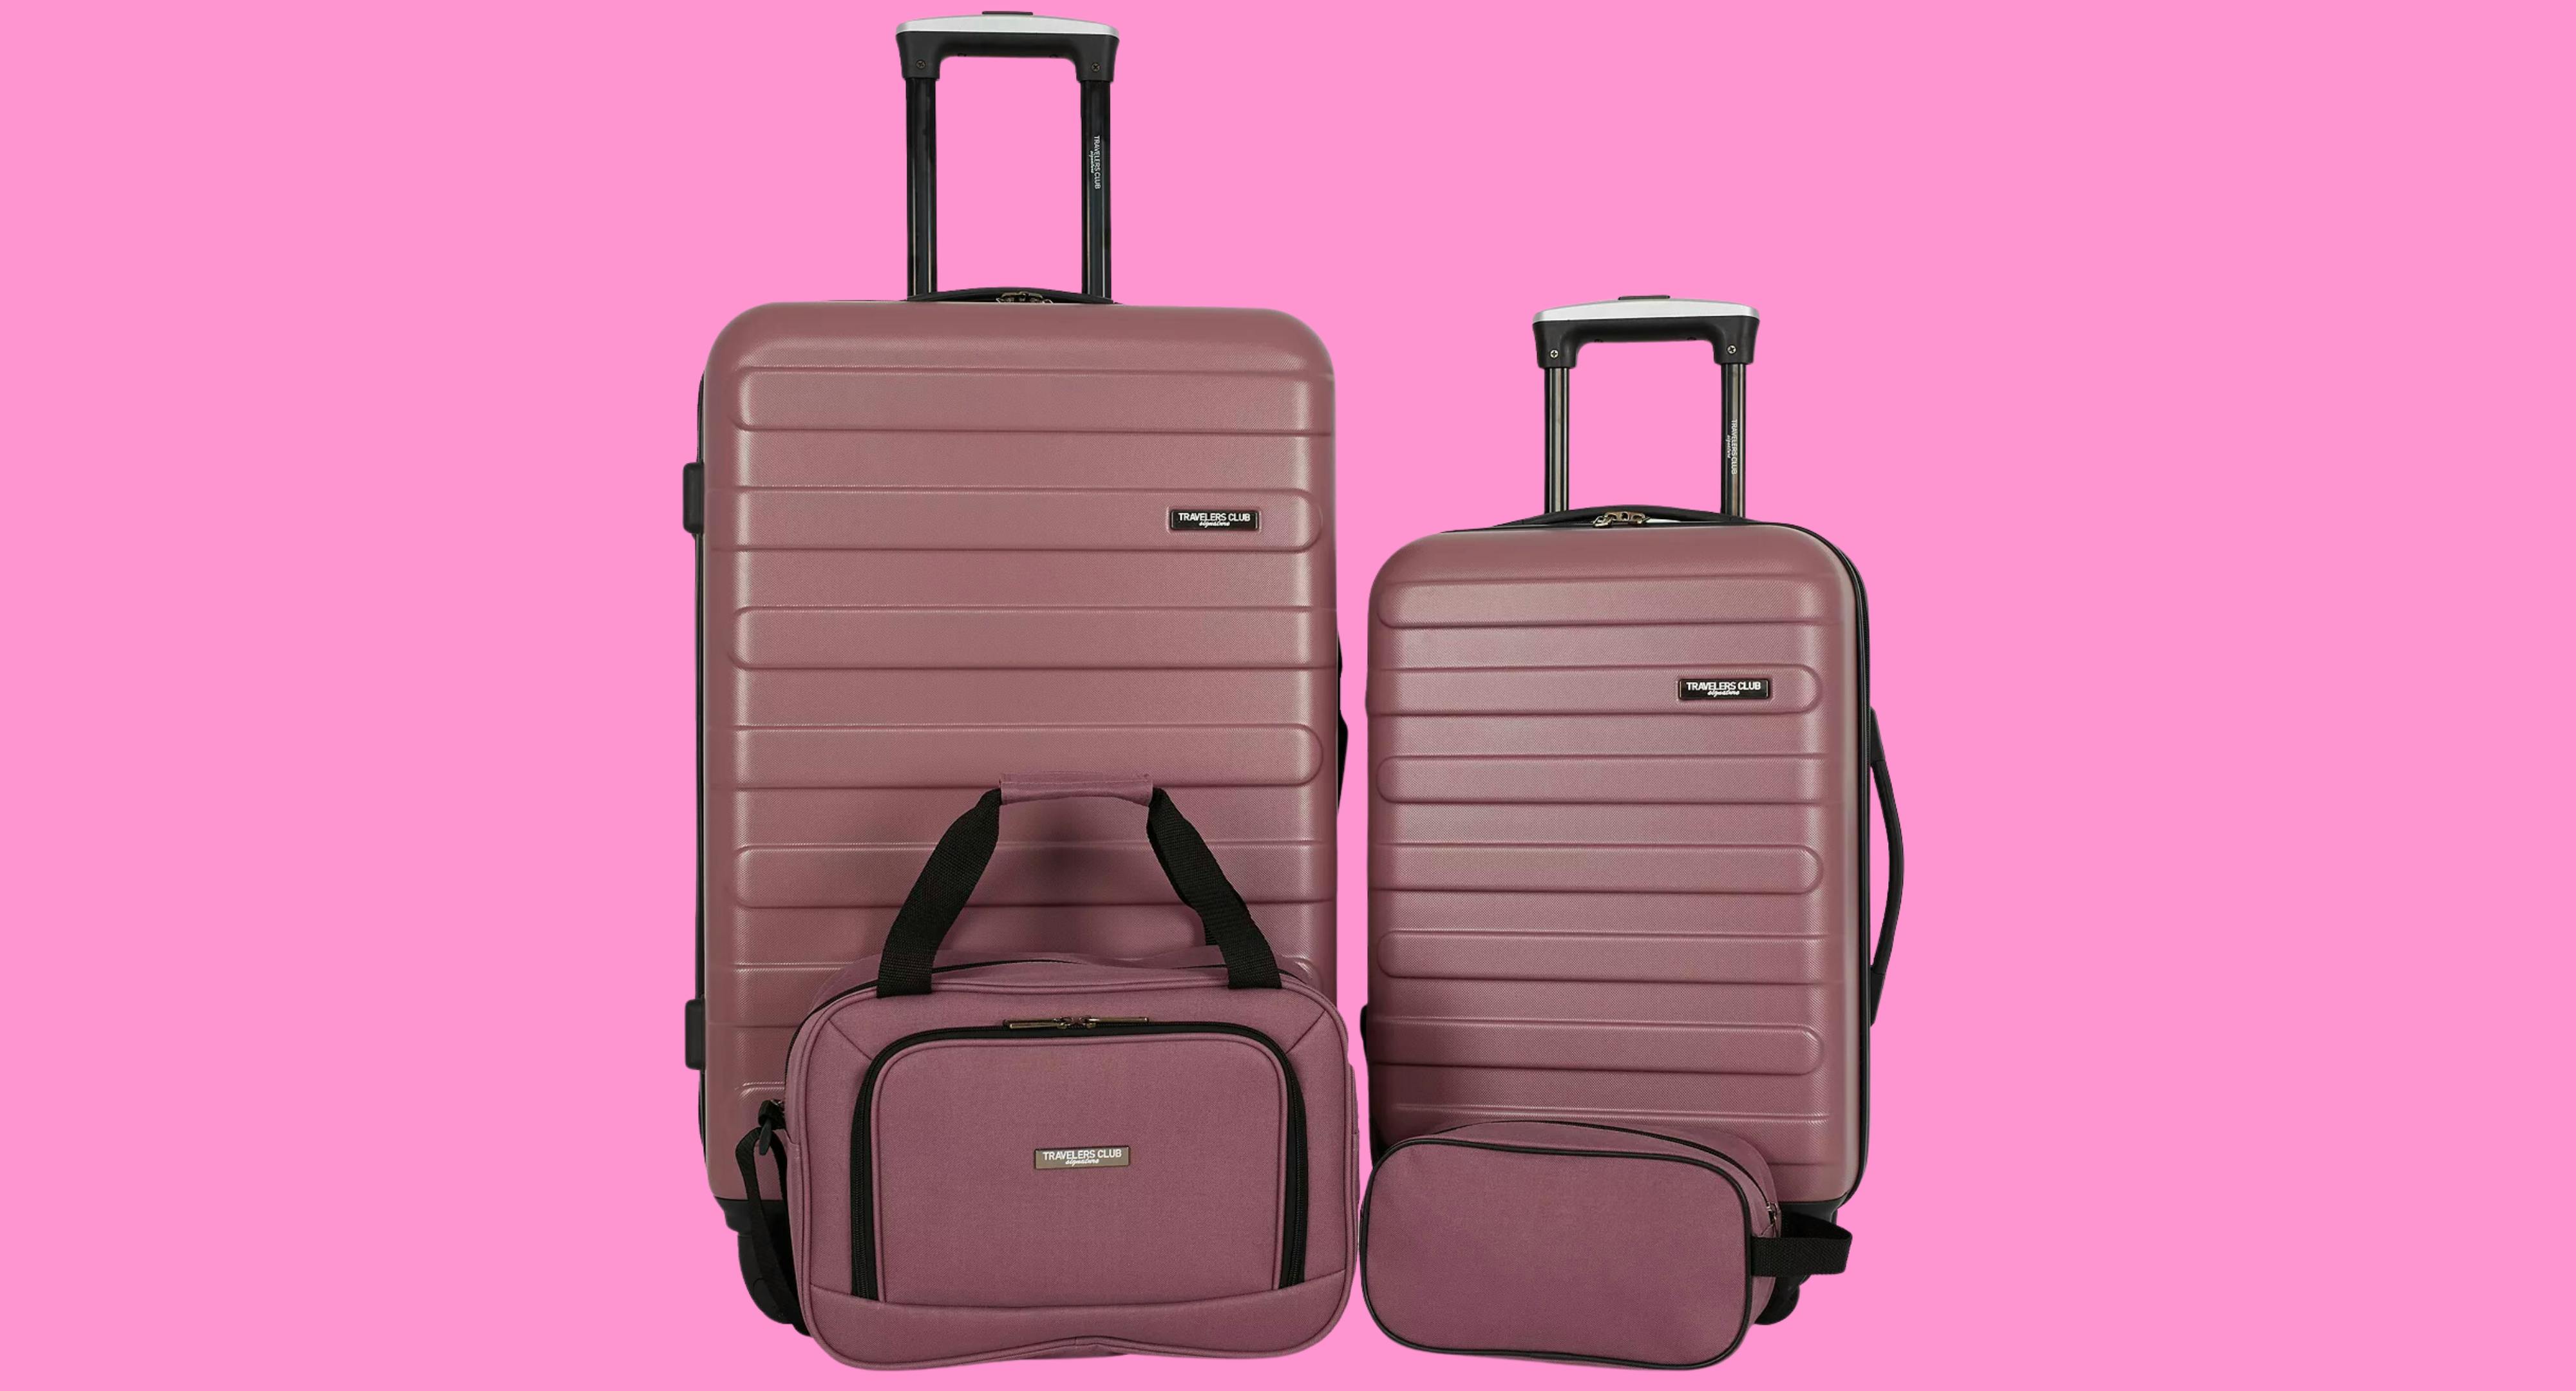 Use code PRIME15 to shop all luxury luggage 15% off #atlantashopping #